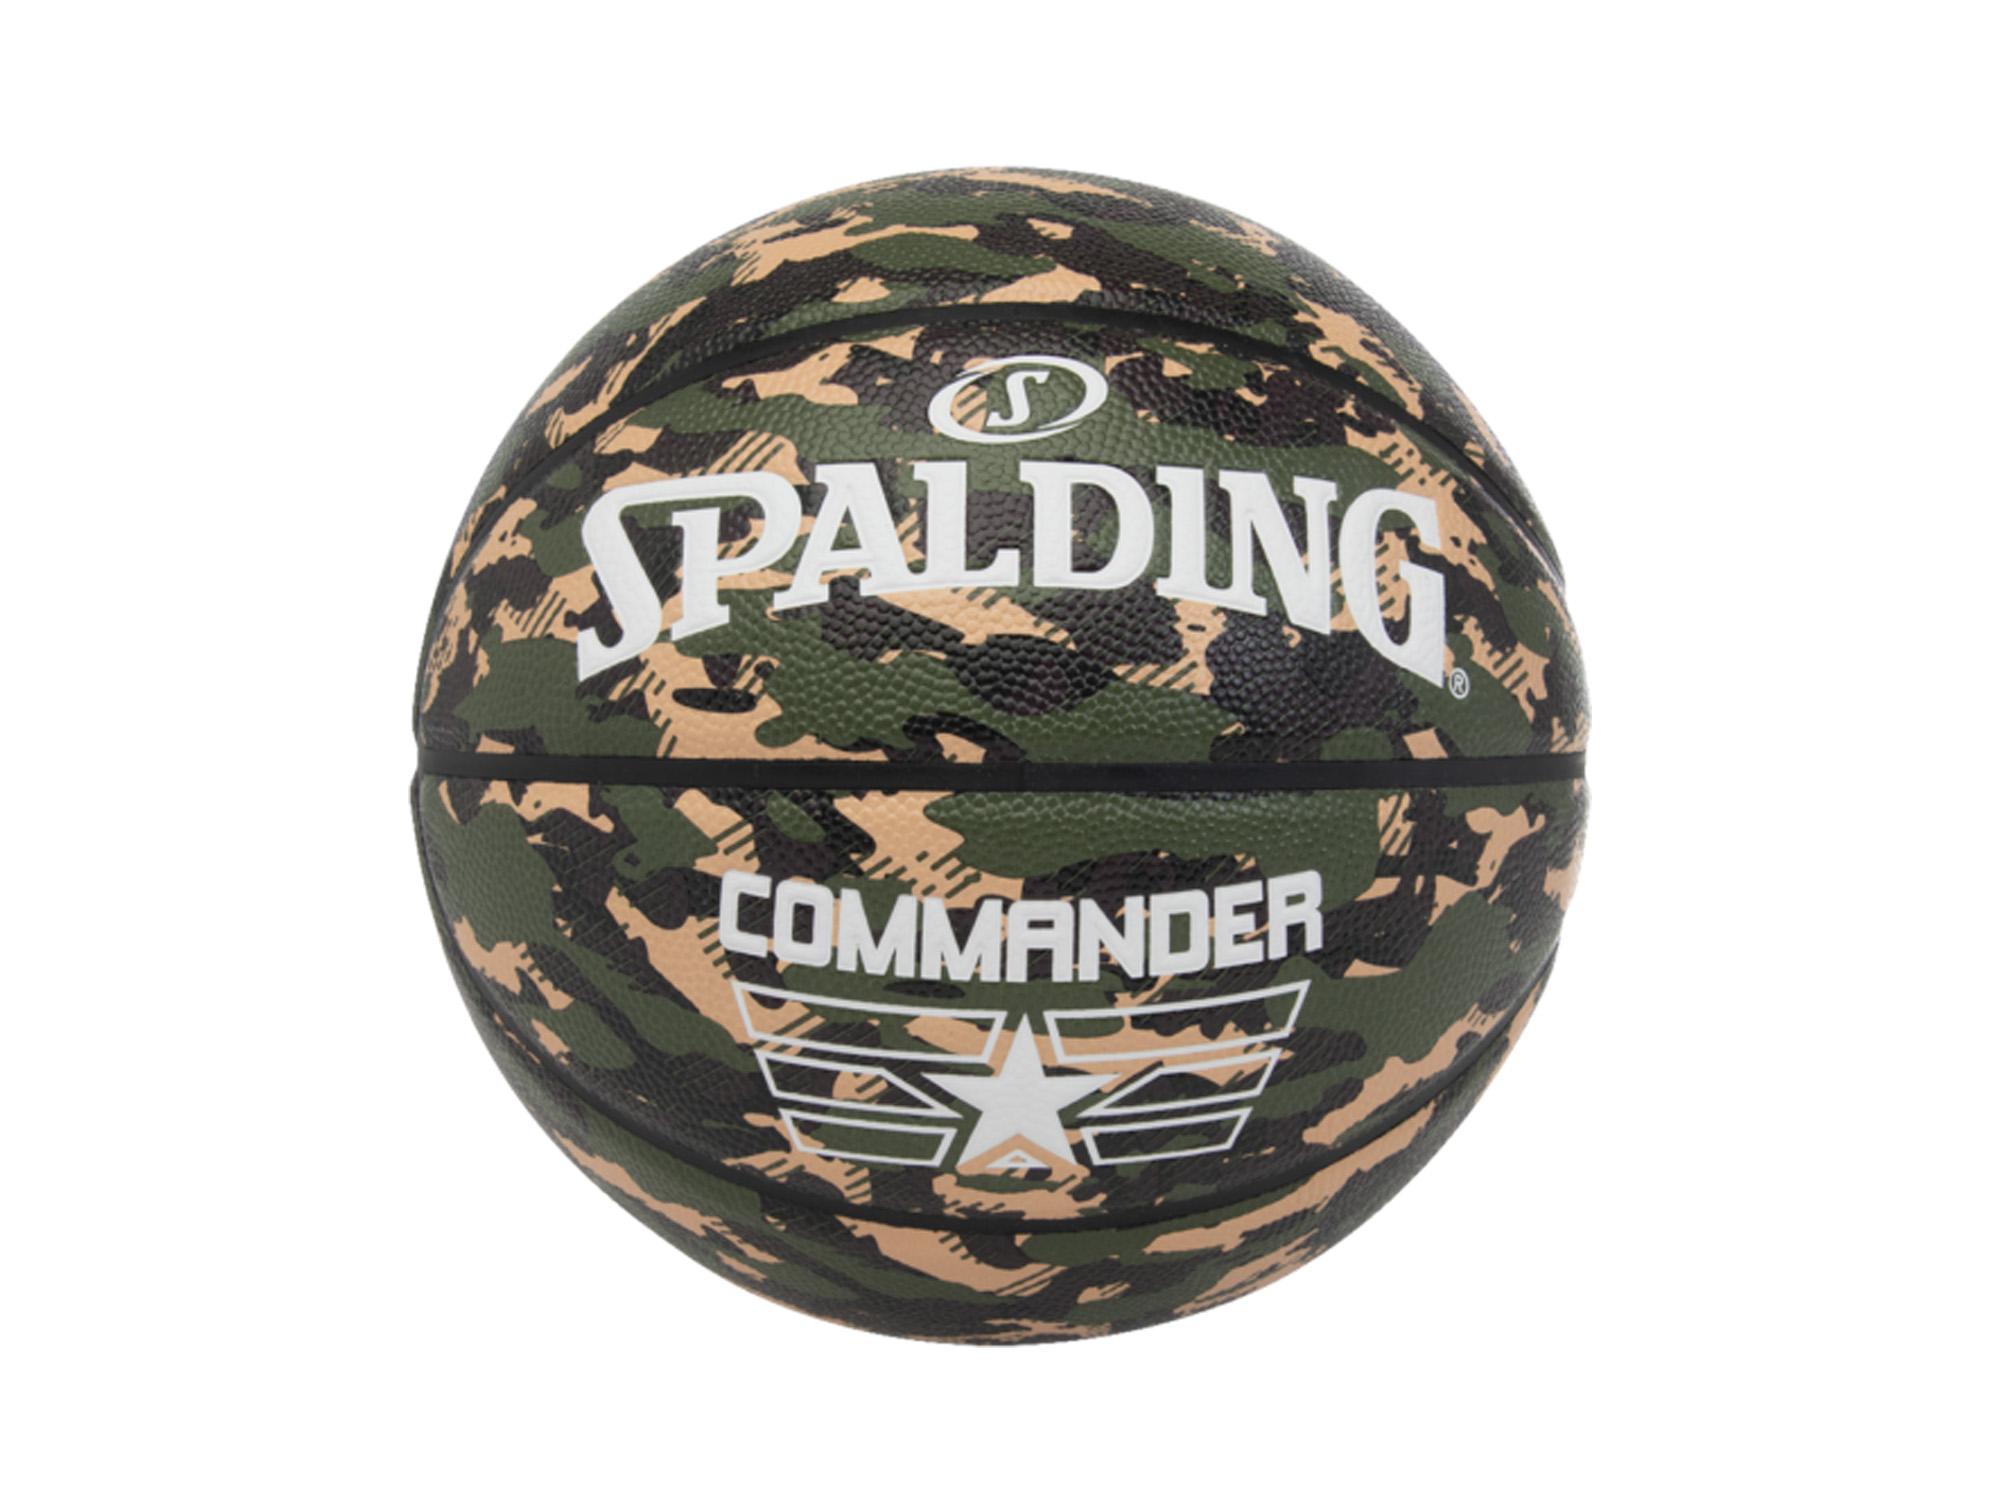 Spalding Commander Camo Basketball